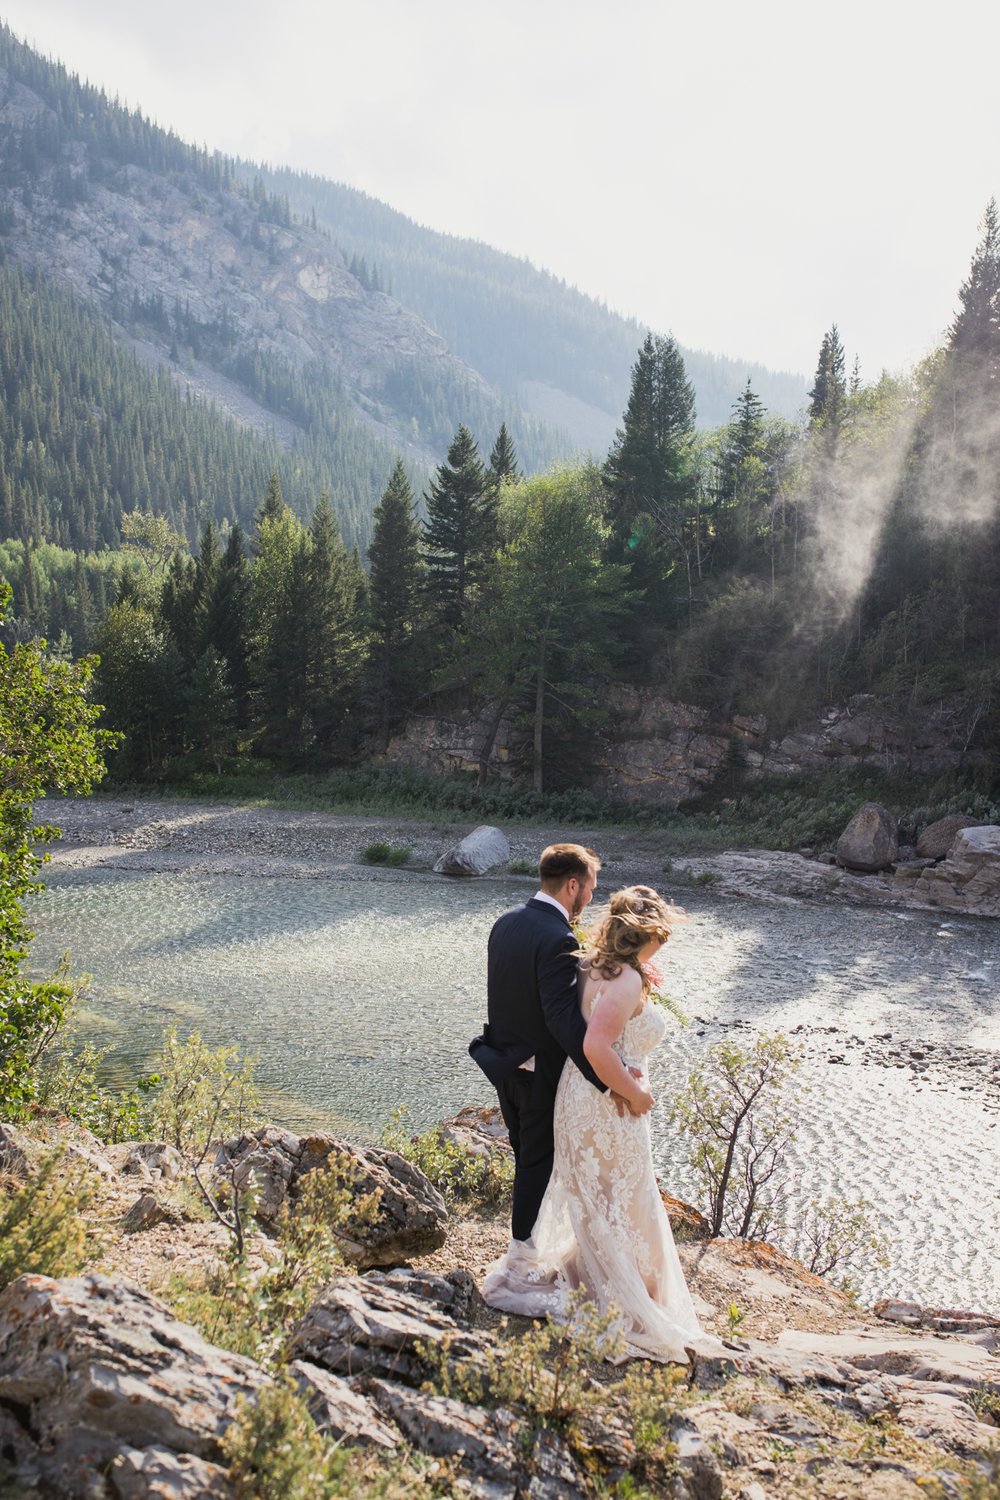 Intimate_Mountain_Wedding_Photography-1048.jpg